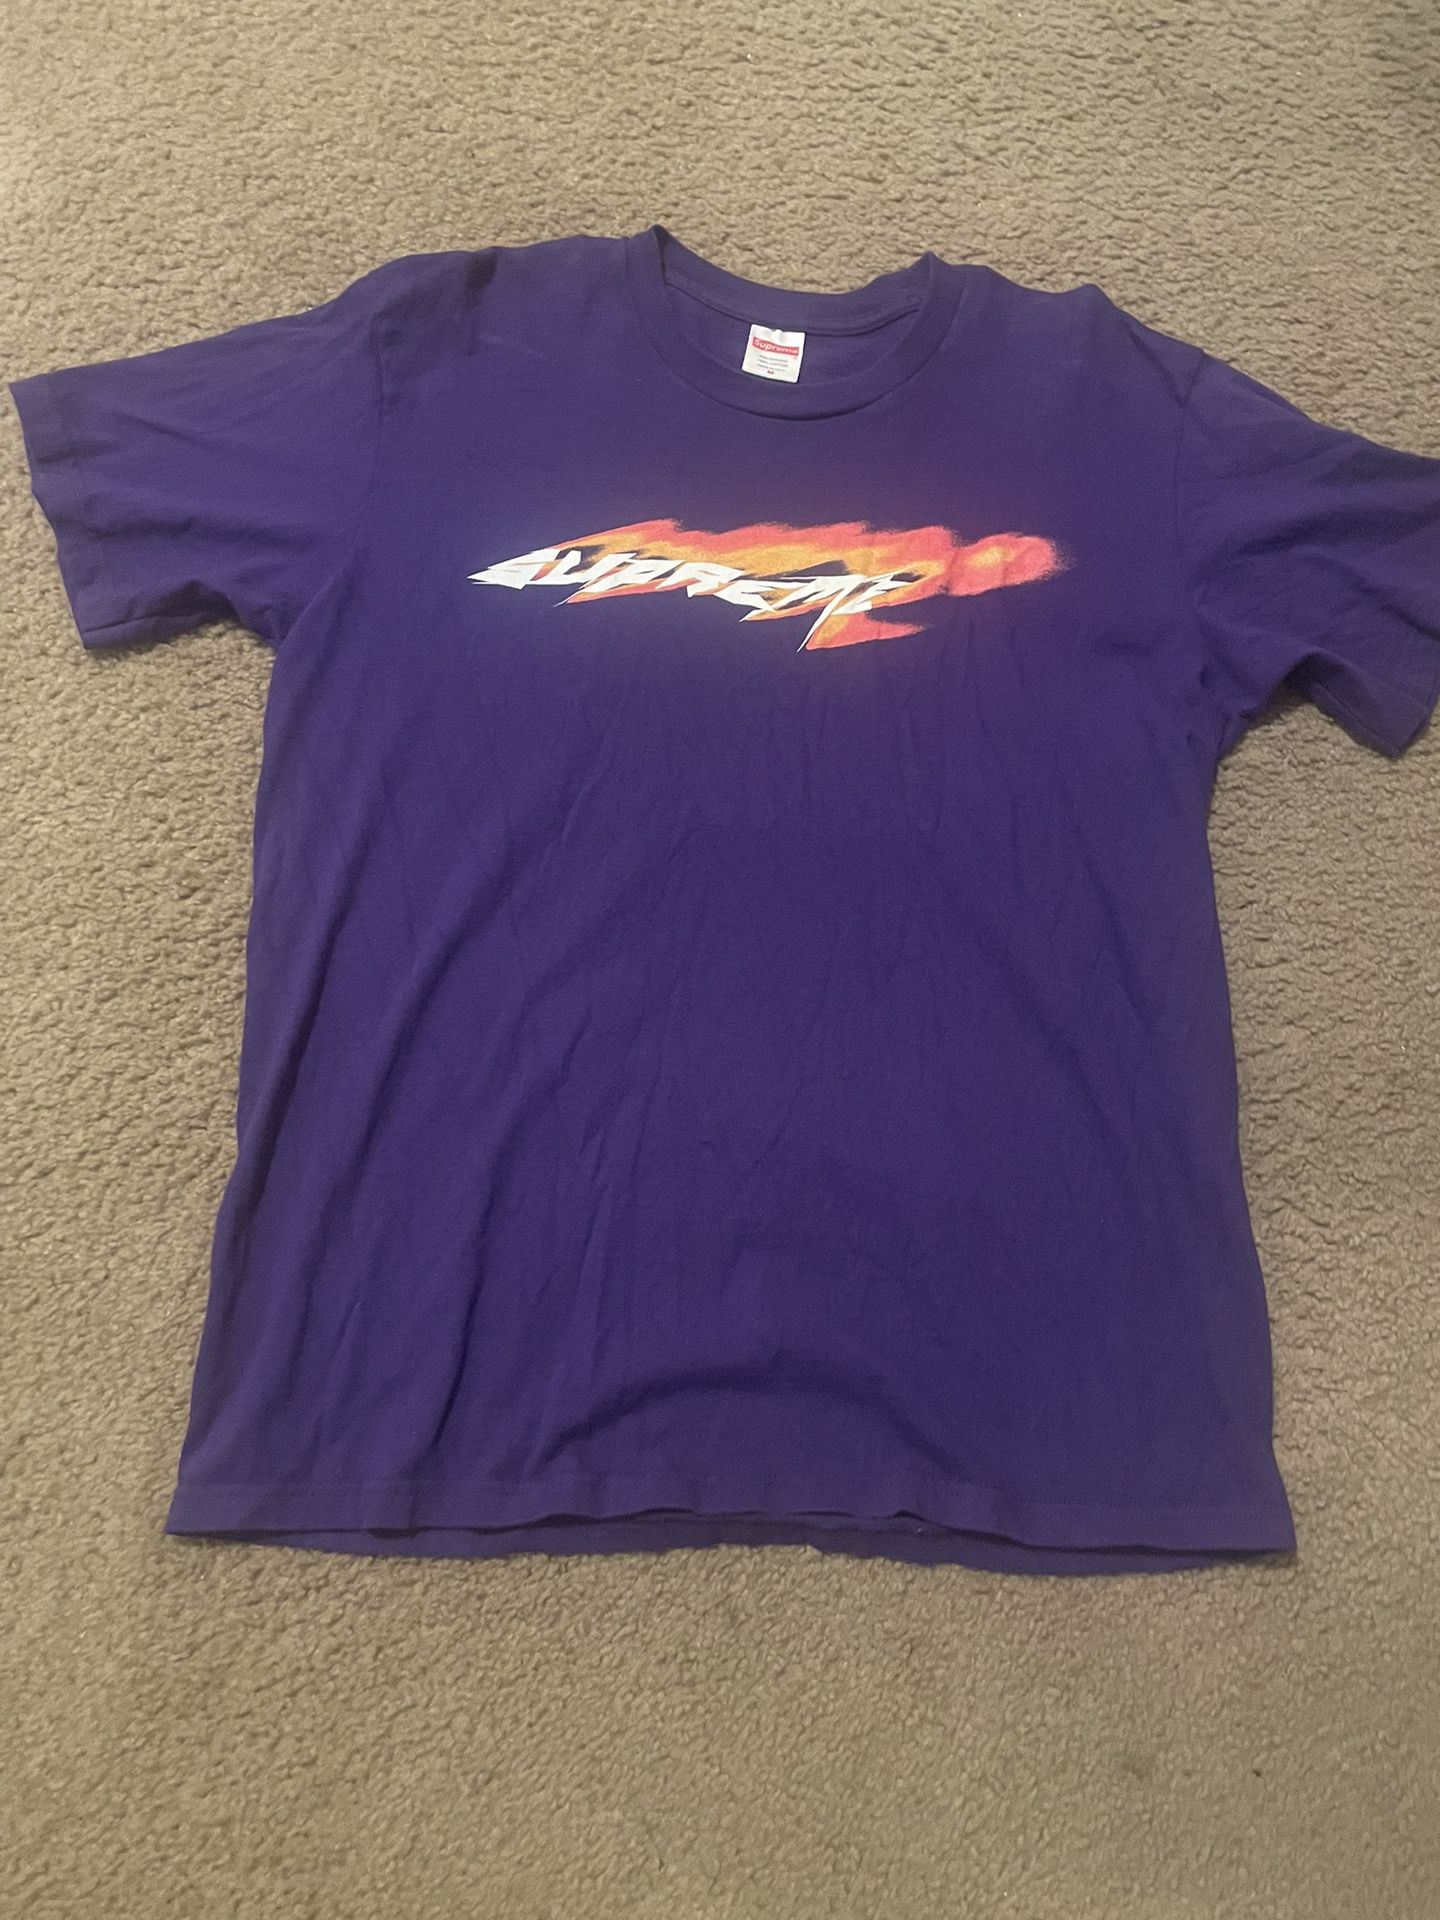 purple supreme tee shirt